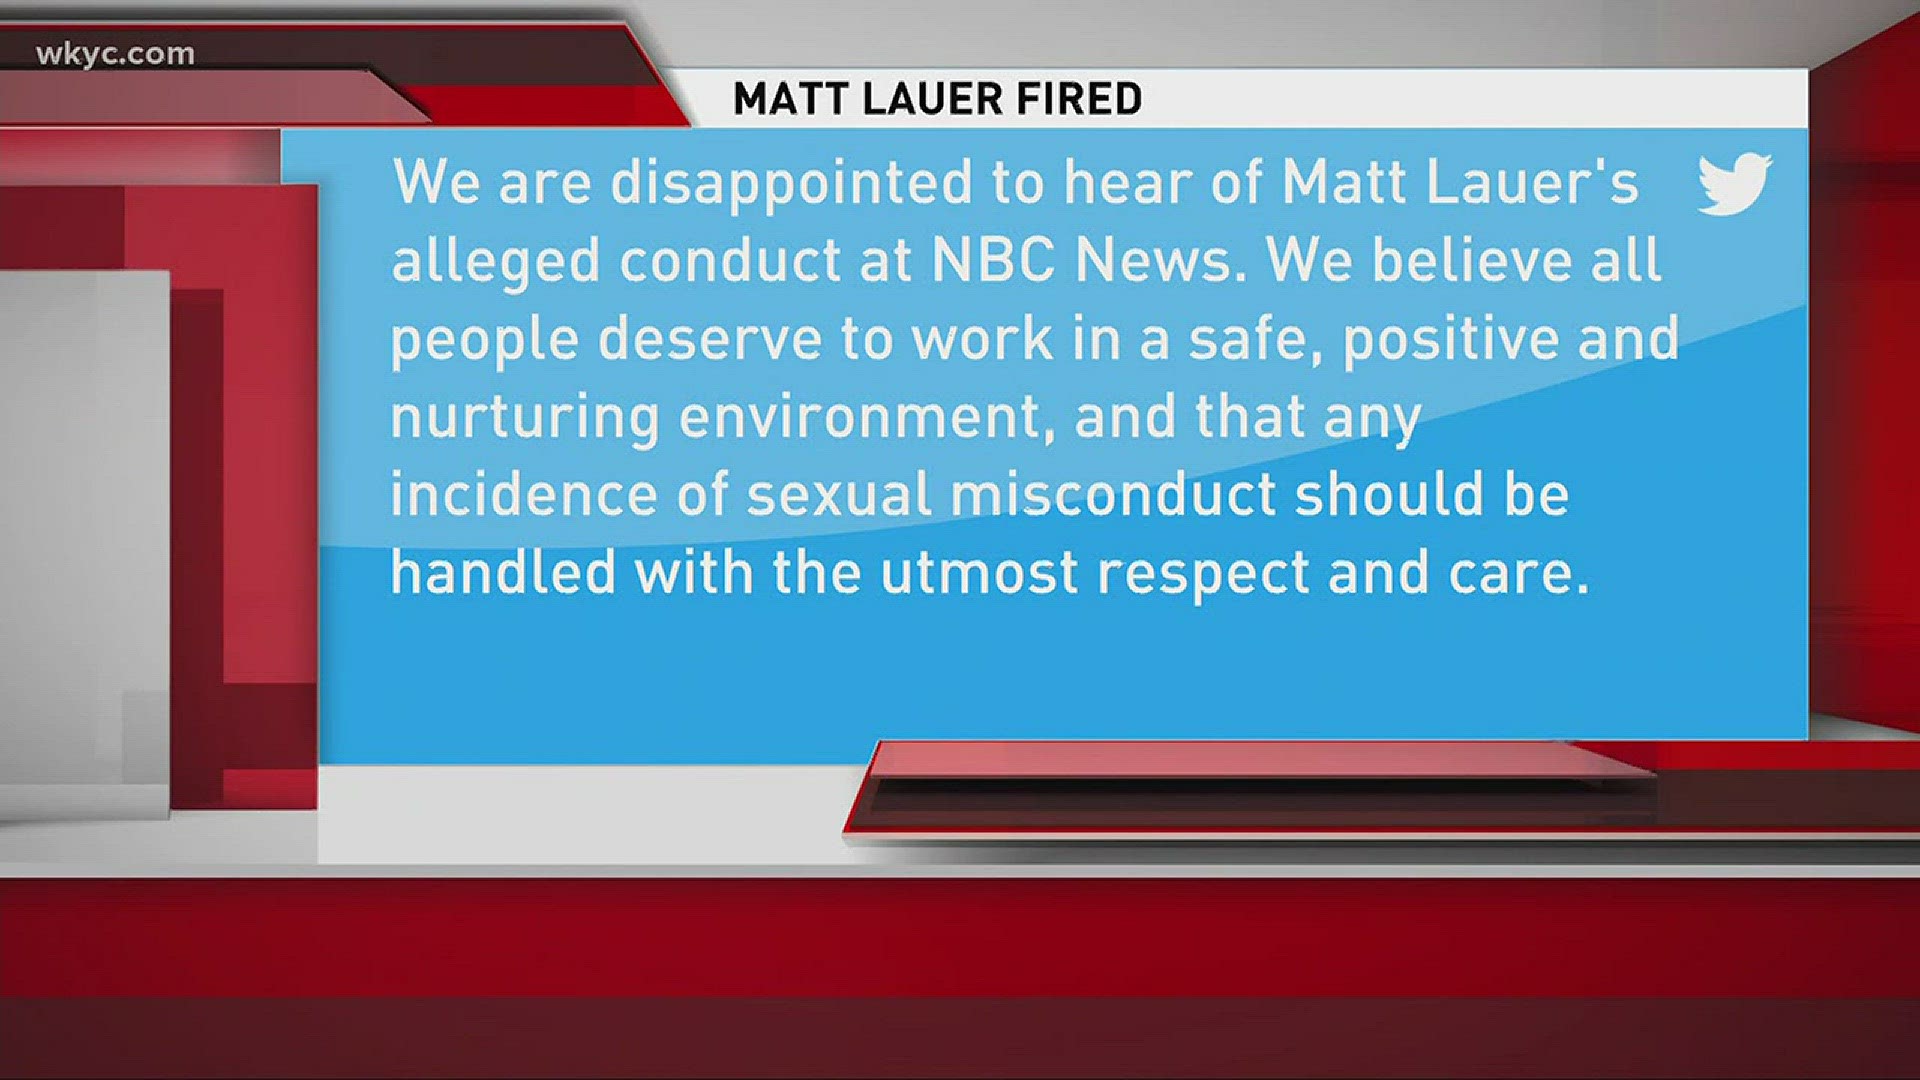 Matt Lauer's and OU's statement